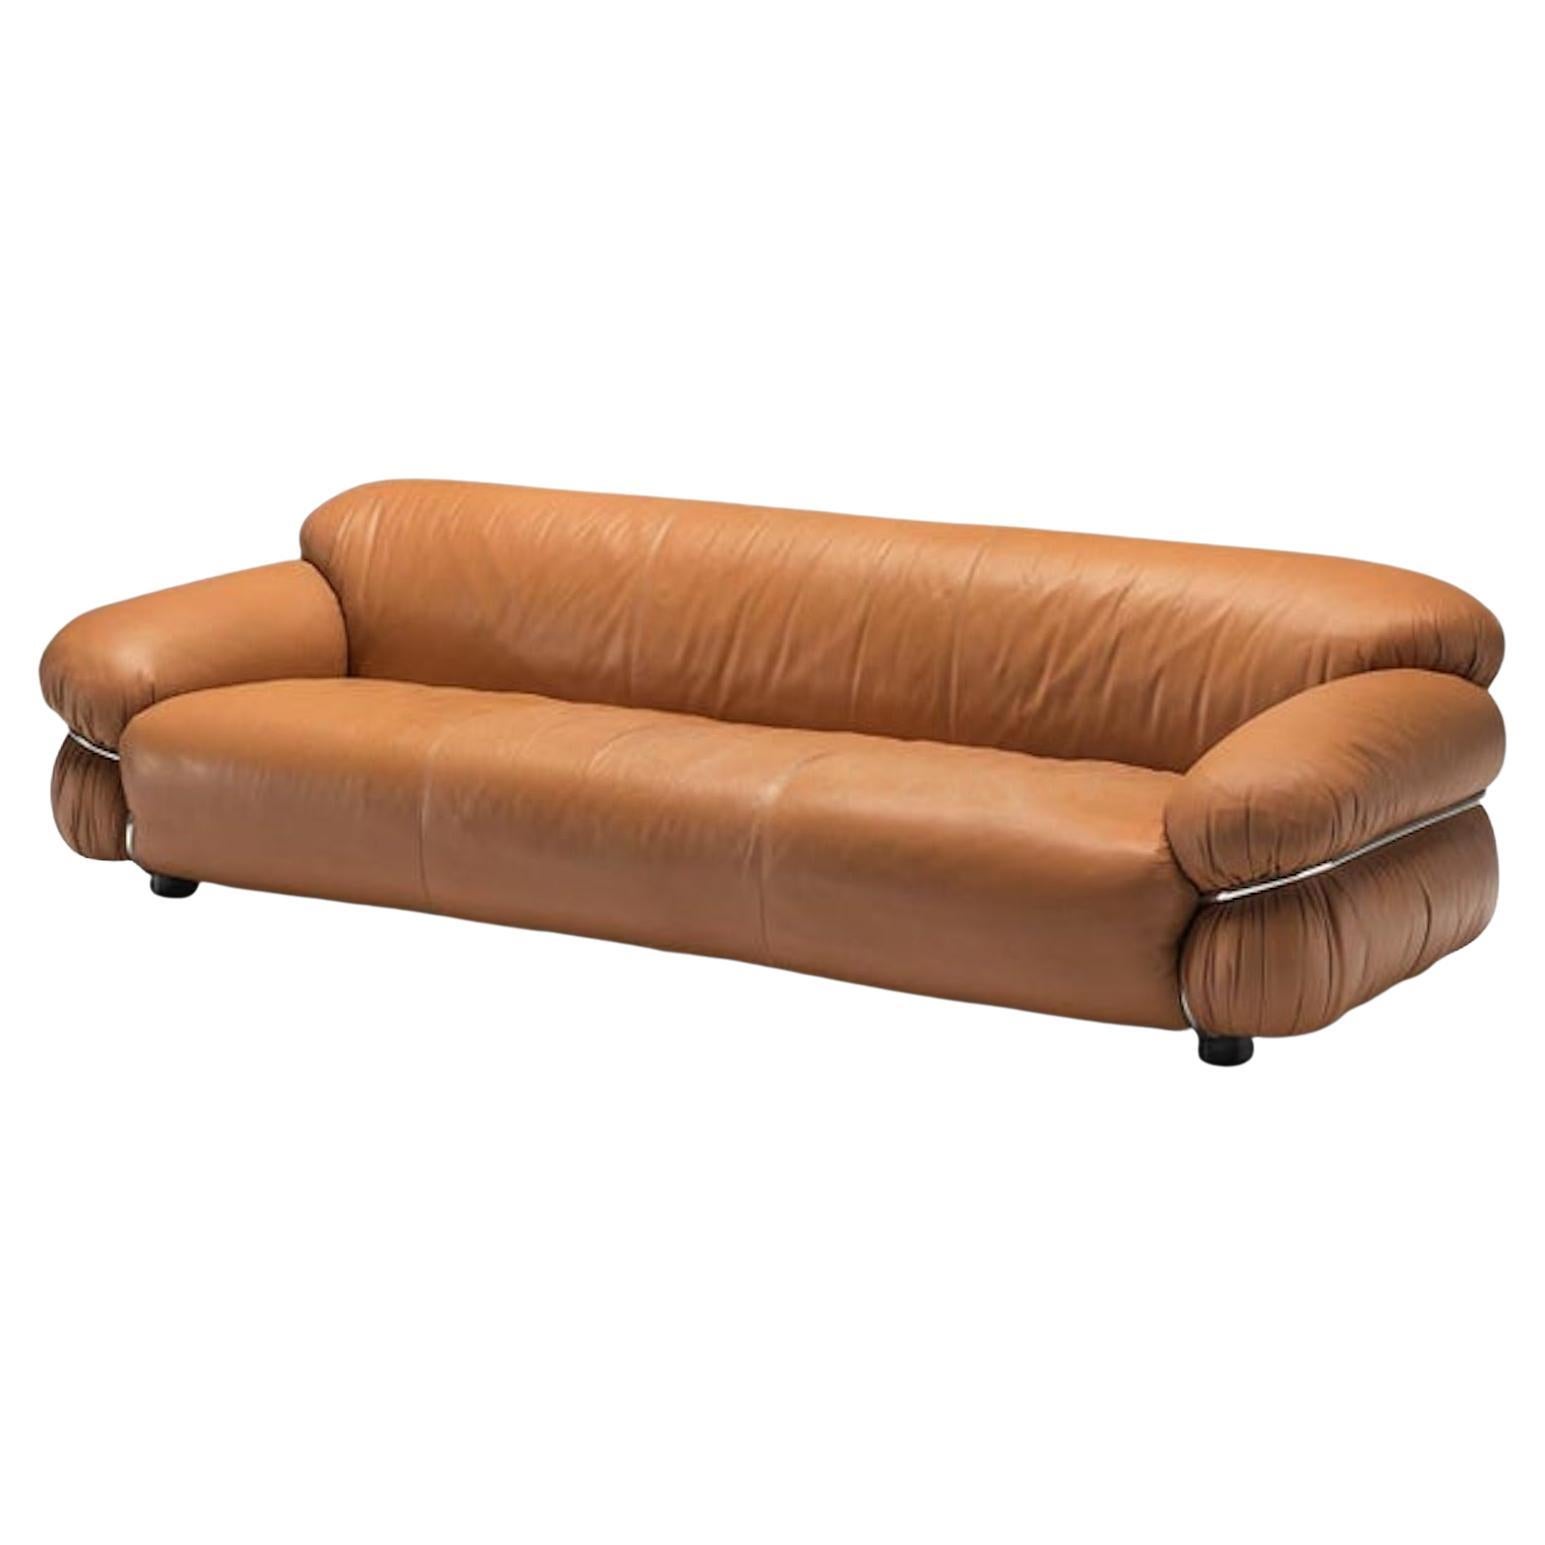 NEW Tacchini Leather Sesann Sofa by Gianfranco Frattini in STOCK